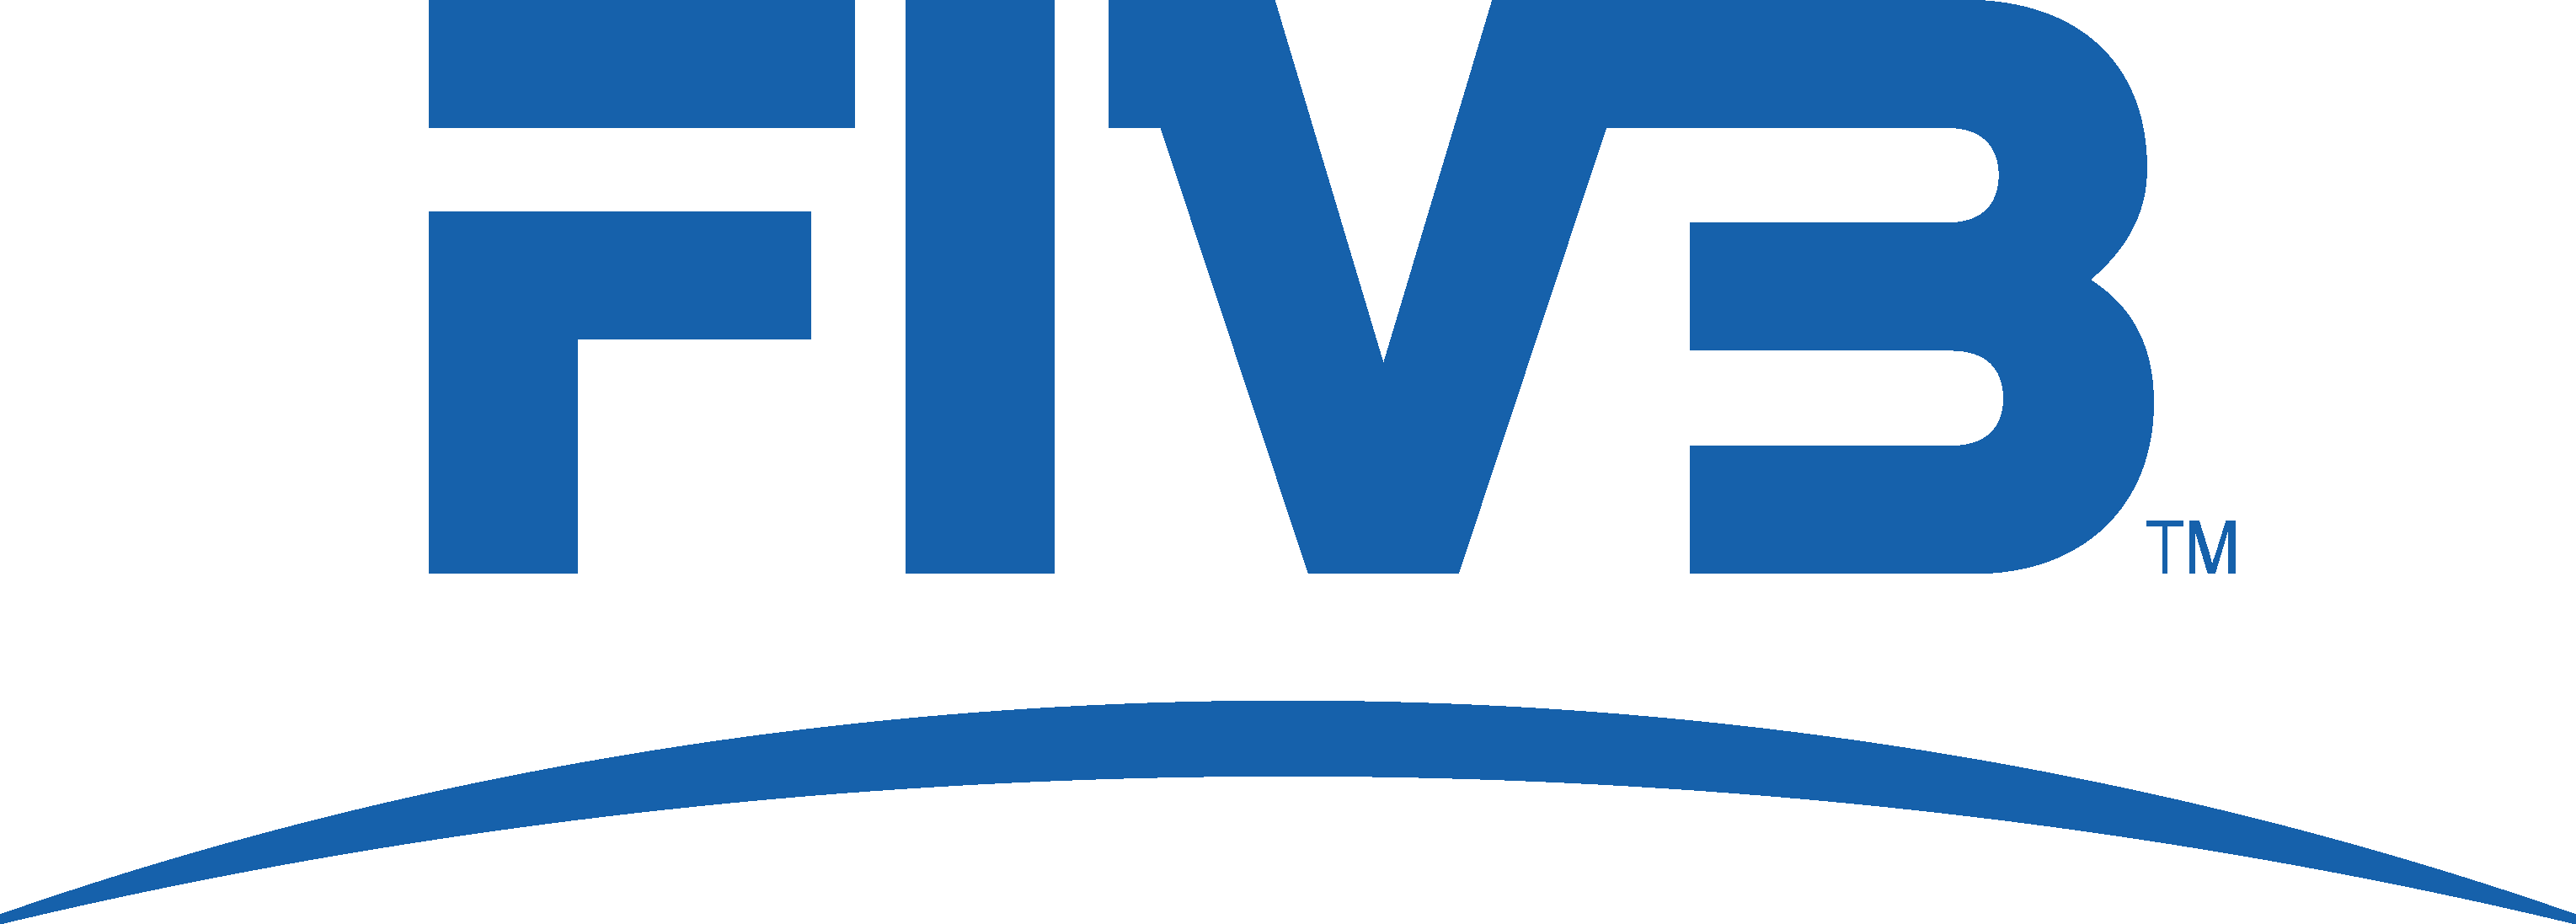 Fédération Internationale de Volleyball (FIVB) Logo png